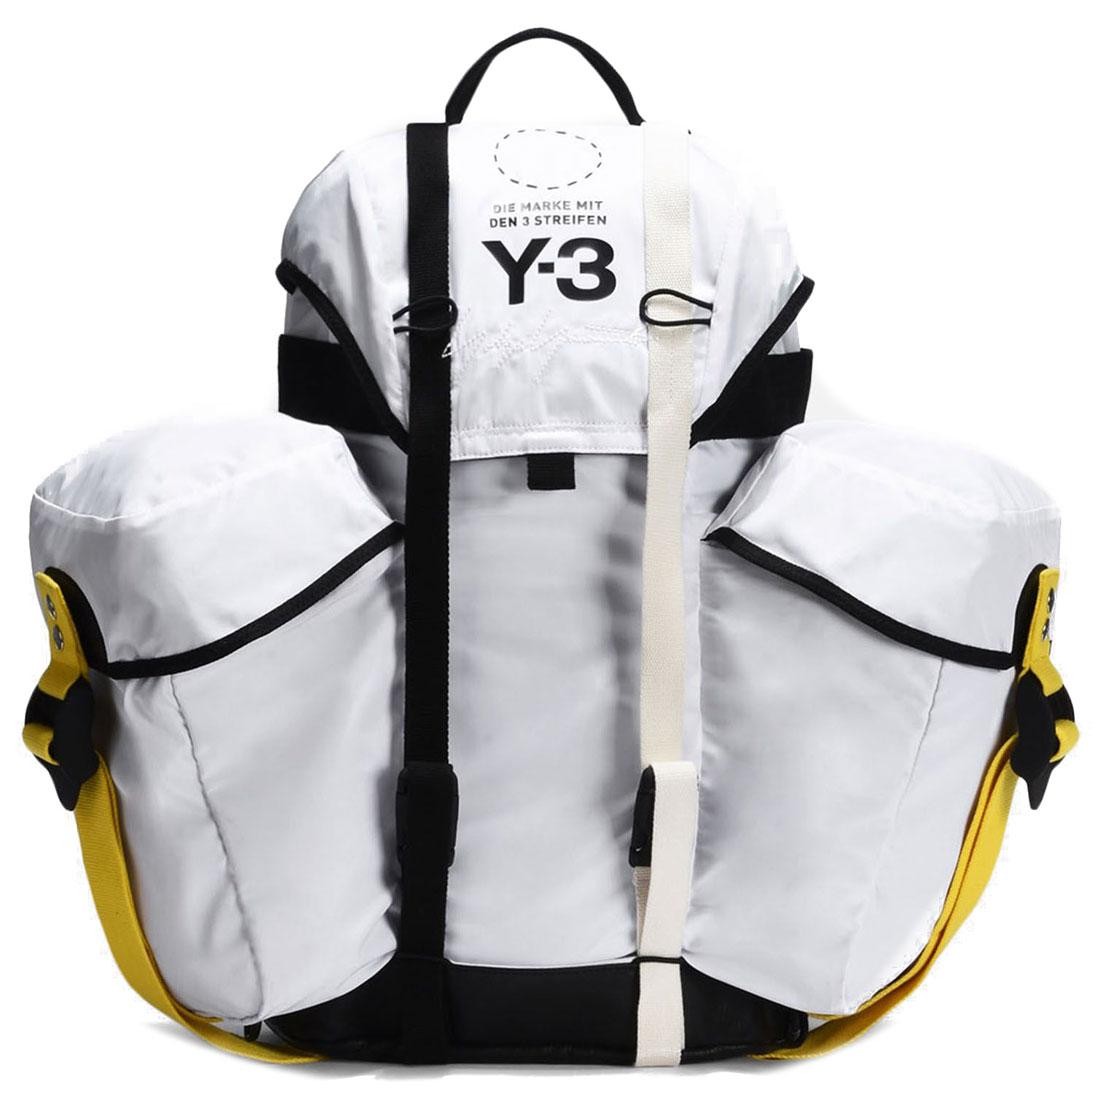 Adidas Y-3 Utility Bag (white)